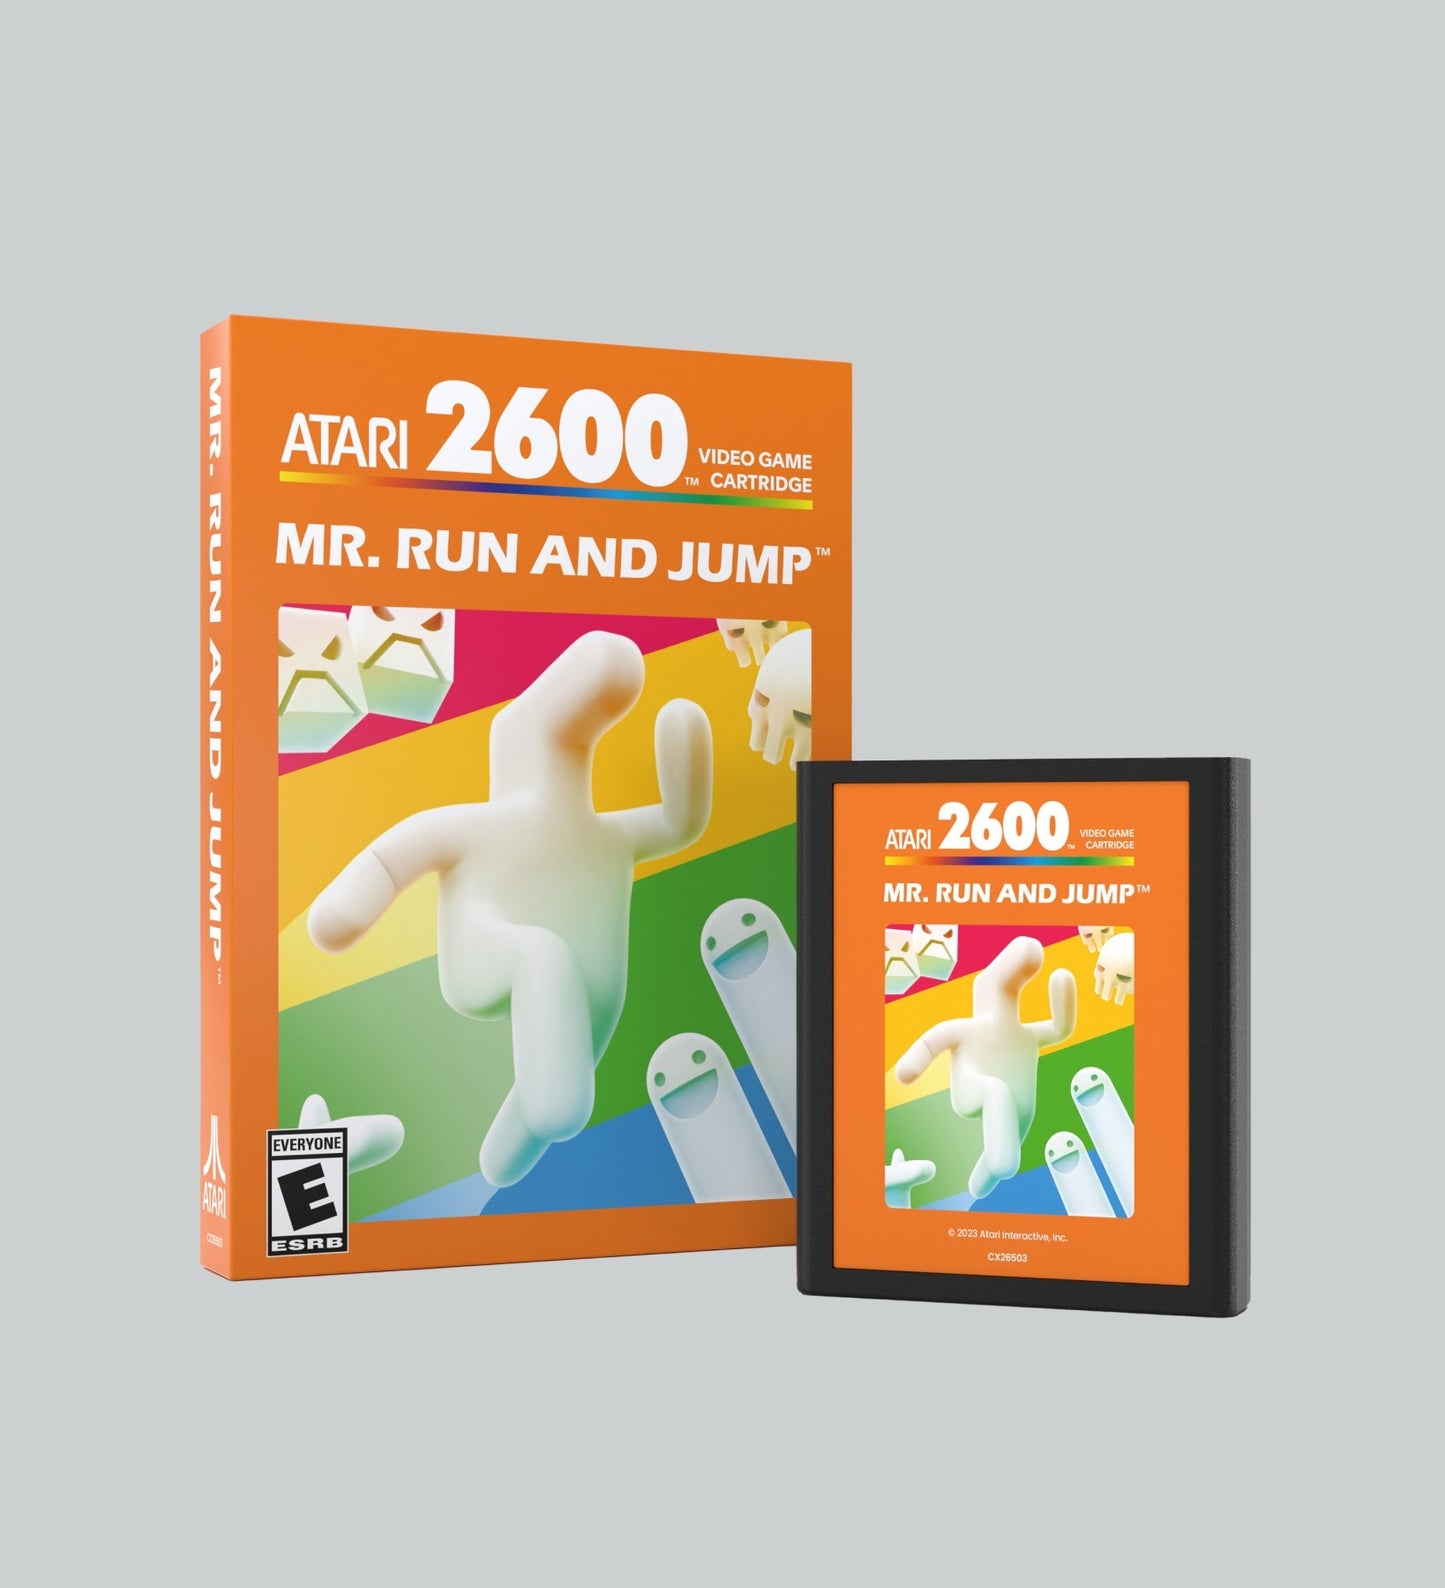 Mr. Run and Jump 2600